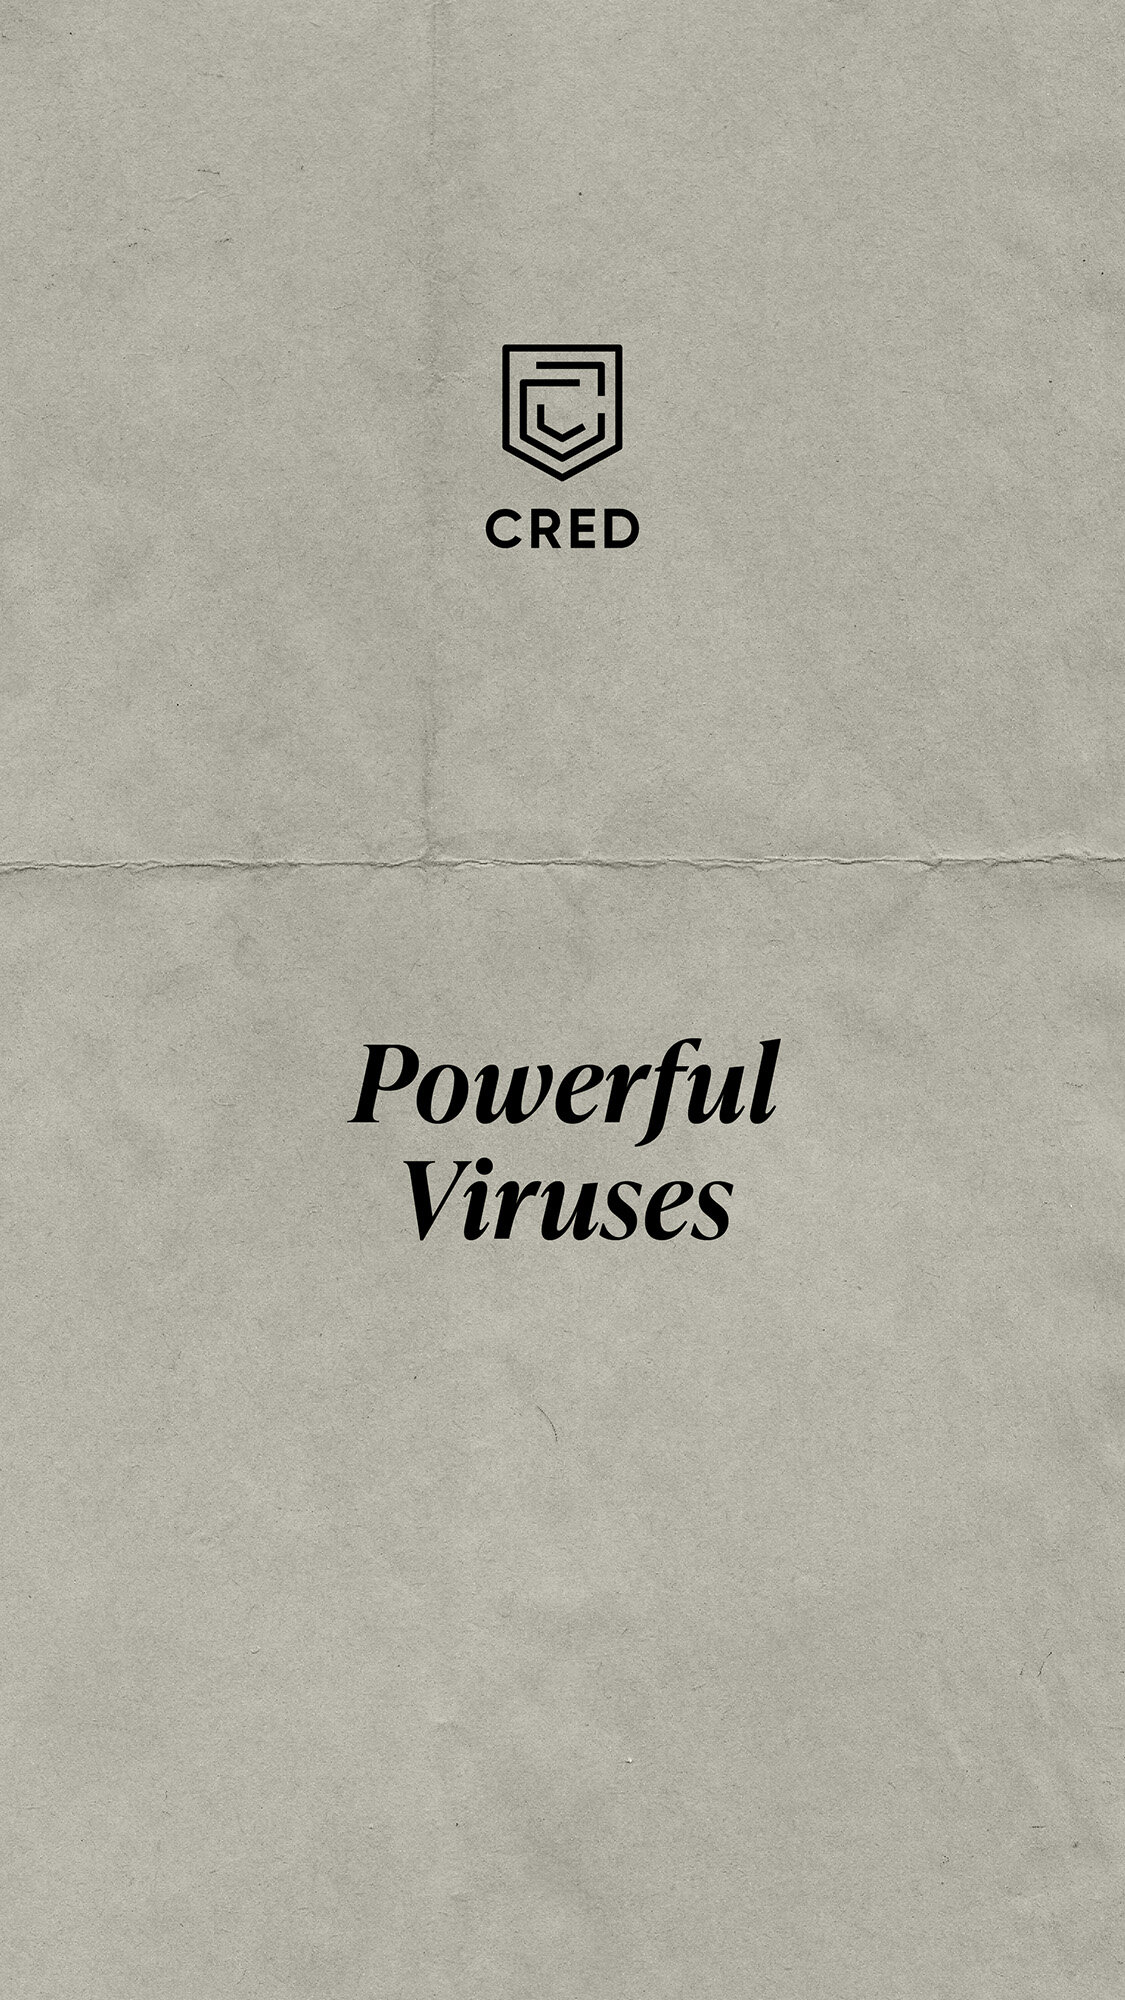 Copy of CRED_POWER_Story_Viruses-01.jpg